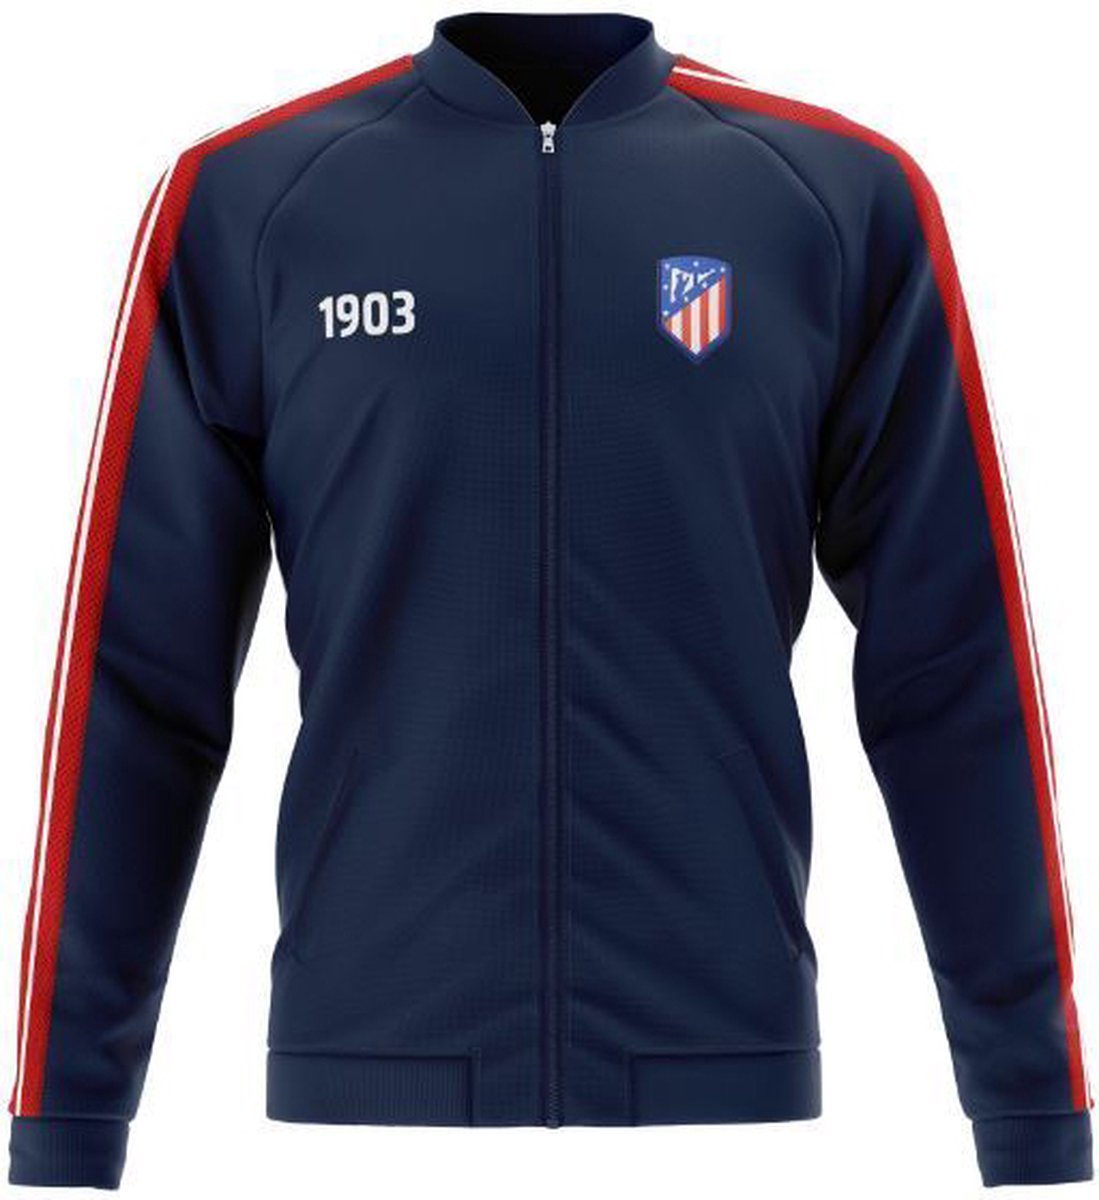 Atletico Madrid jacket volwassenen - maat 2XL - 1903 blauw/rood